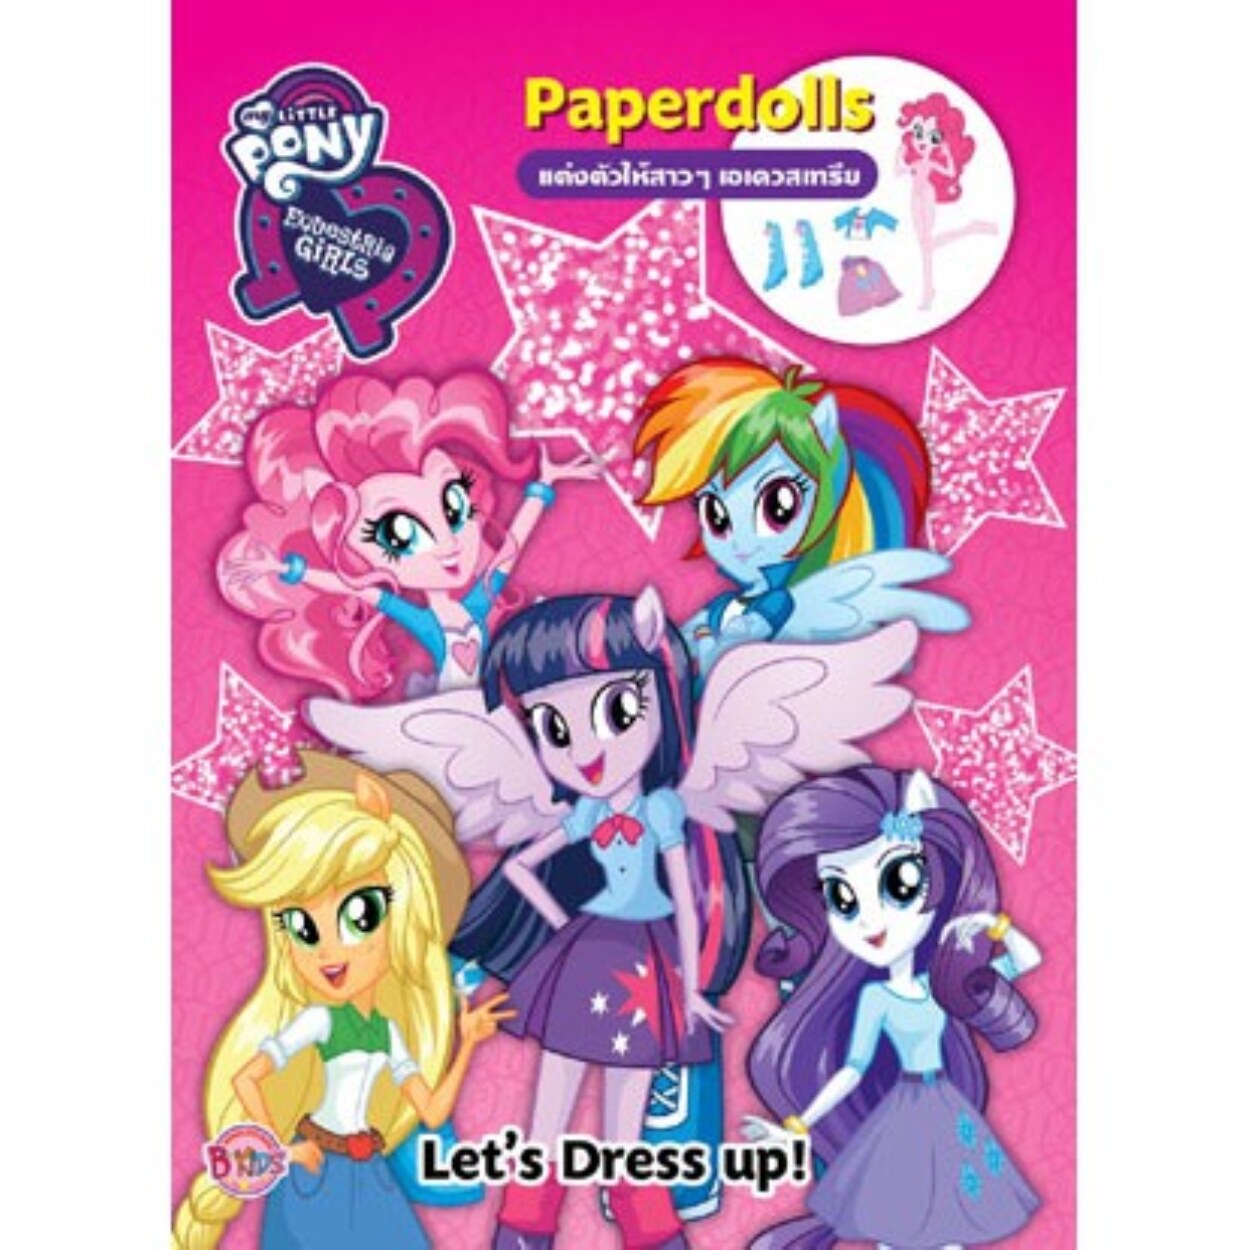 （HOT) My Little Pony Equestria Girls: Let's Dress up! แต่งตัวให้สาวๆ เอเควสเทรีย Paperdolls แต่งตัวตุ๊กตา